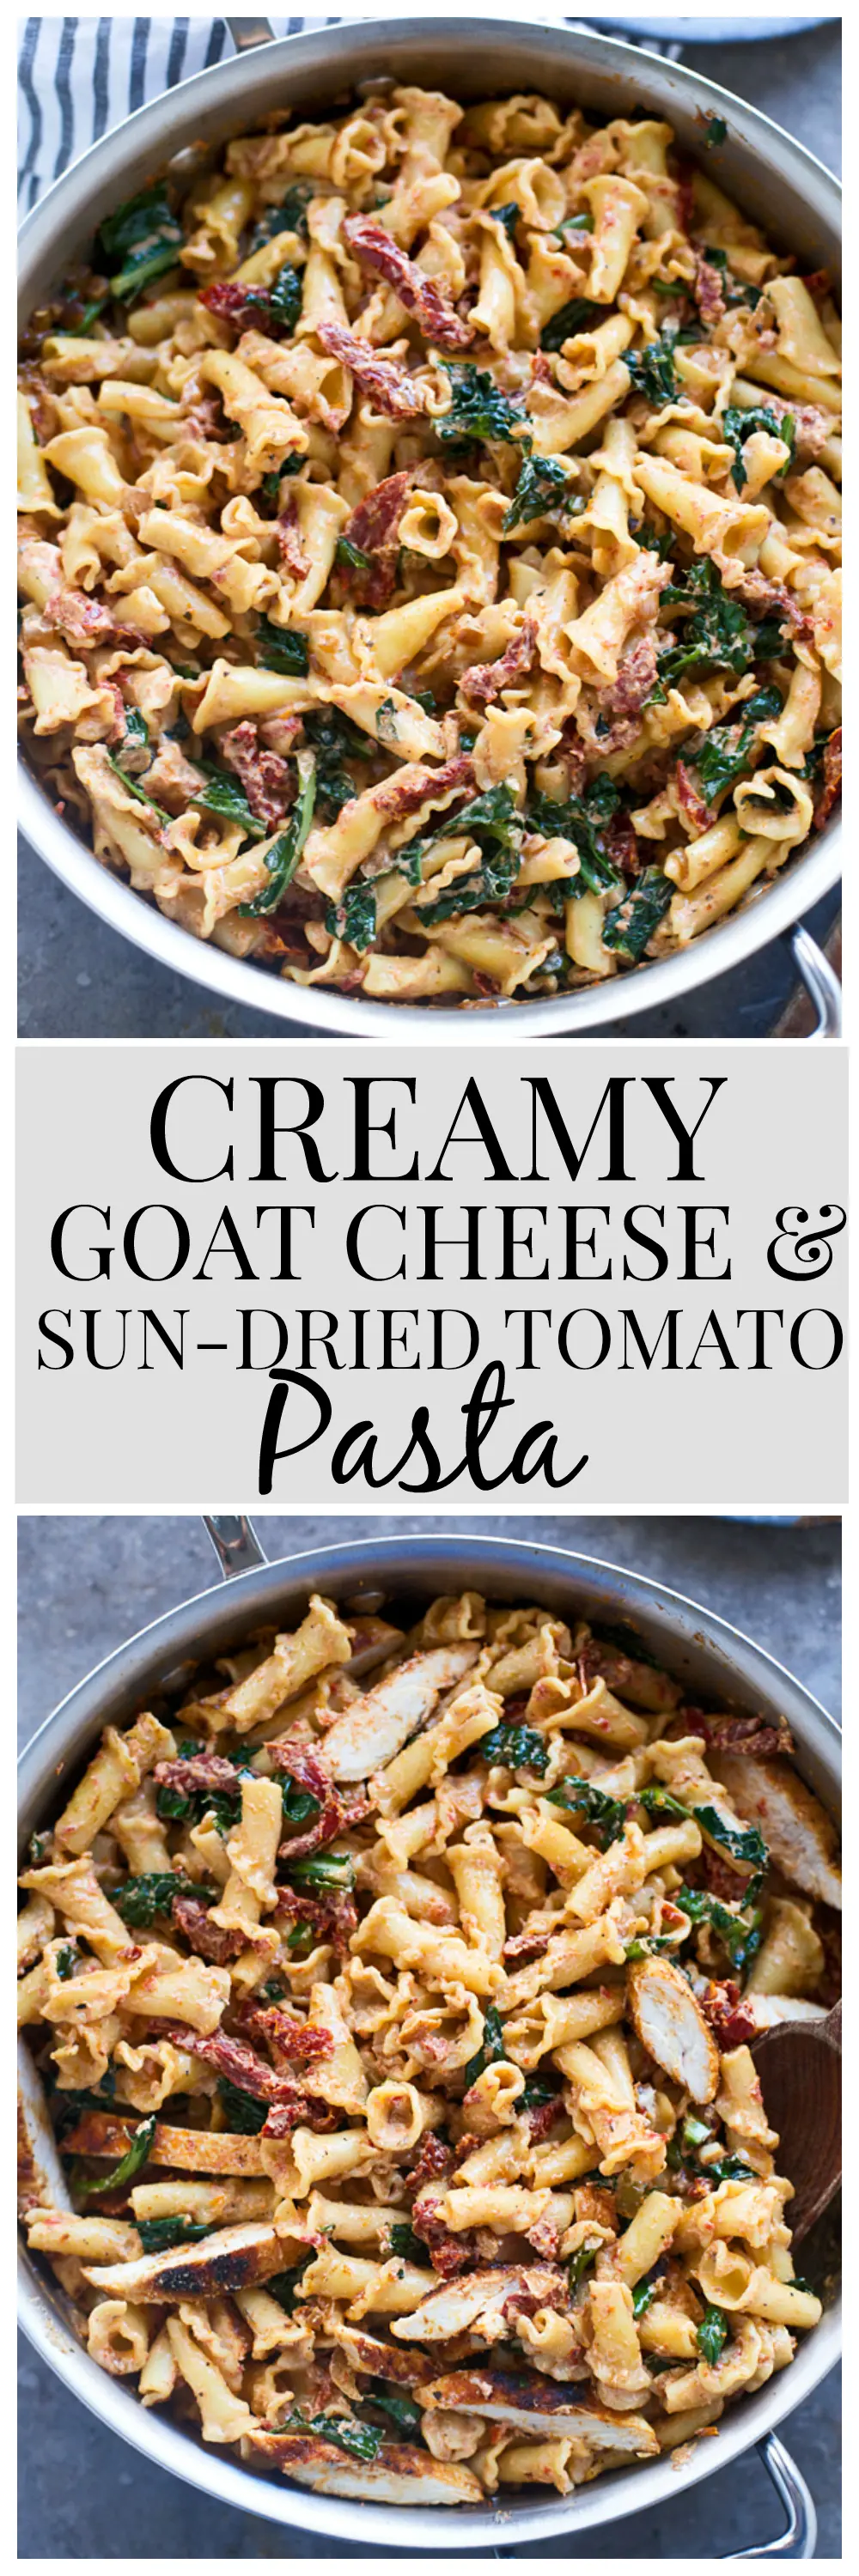 Creamy Goat Cheese and Sun-Dried Tomato Pasta